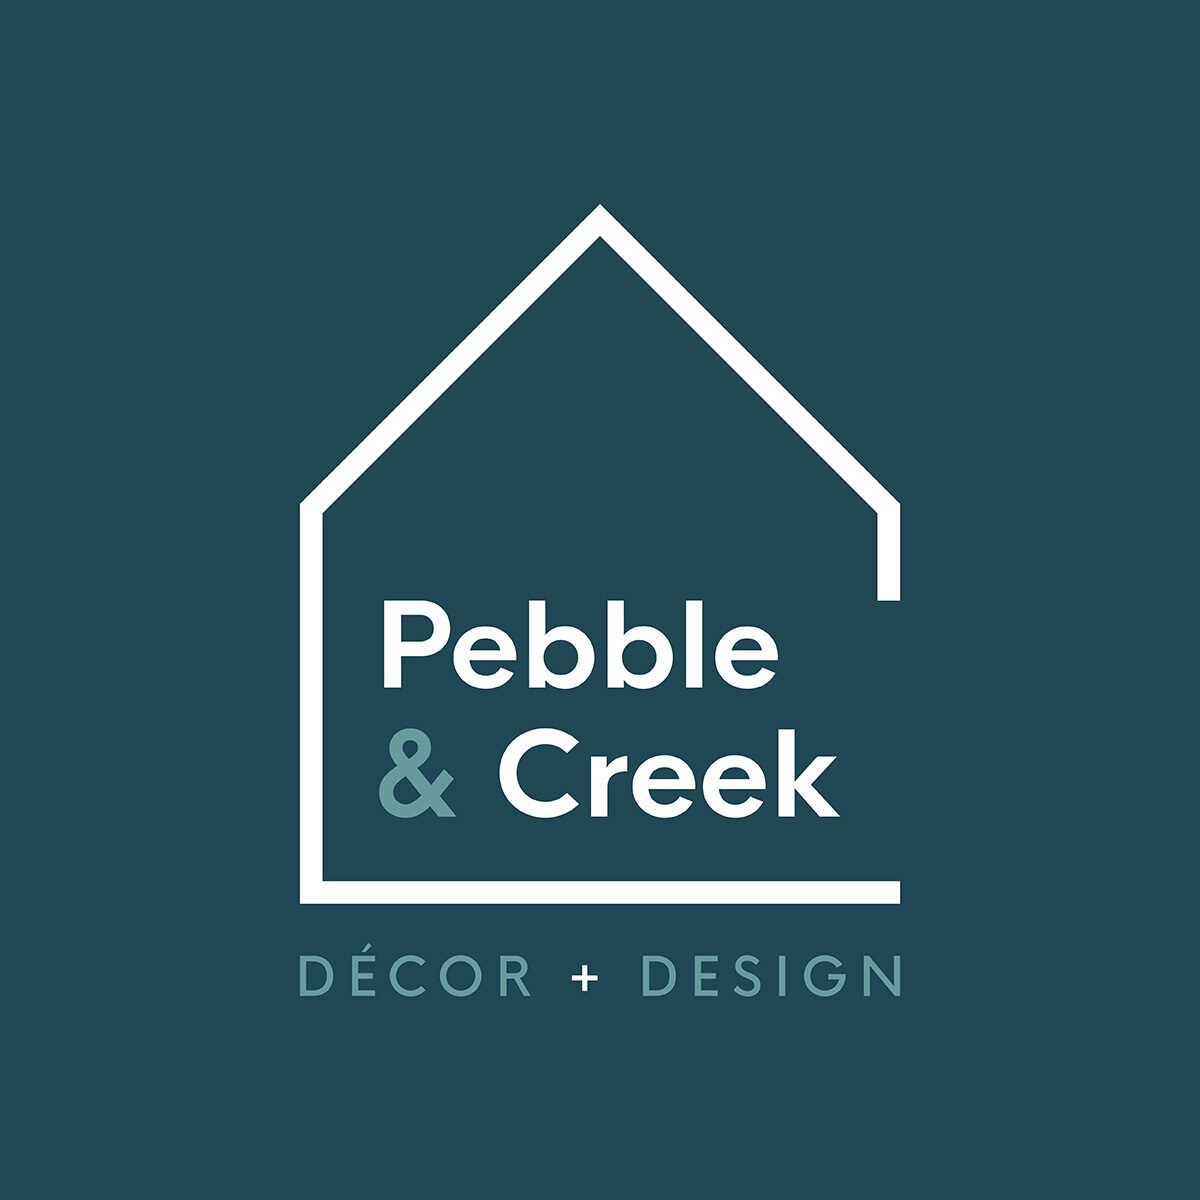 lindsay-mcghee-designs-pebble-and-creek-logo-two-tone-tealbg-1200